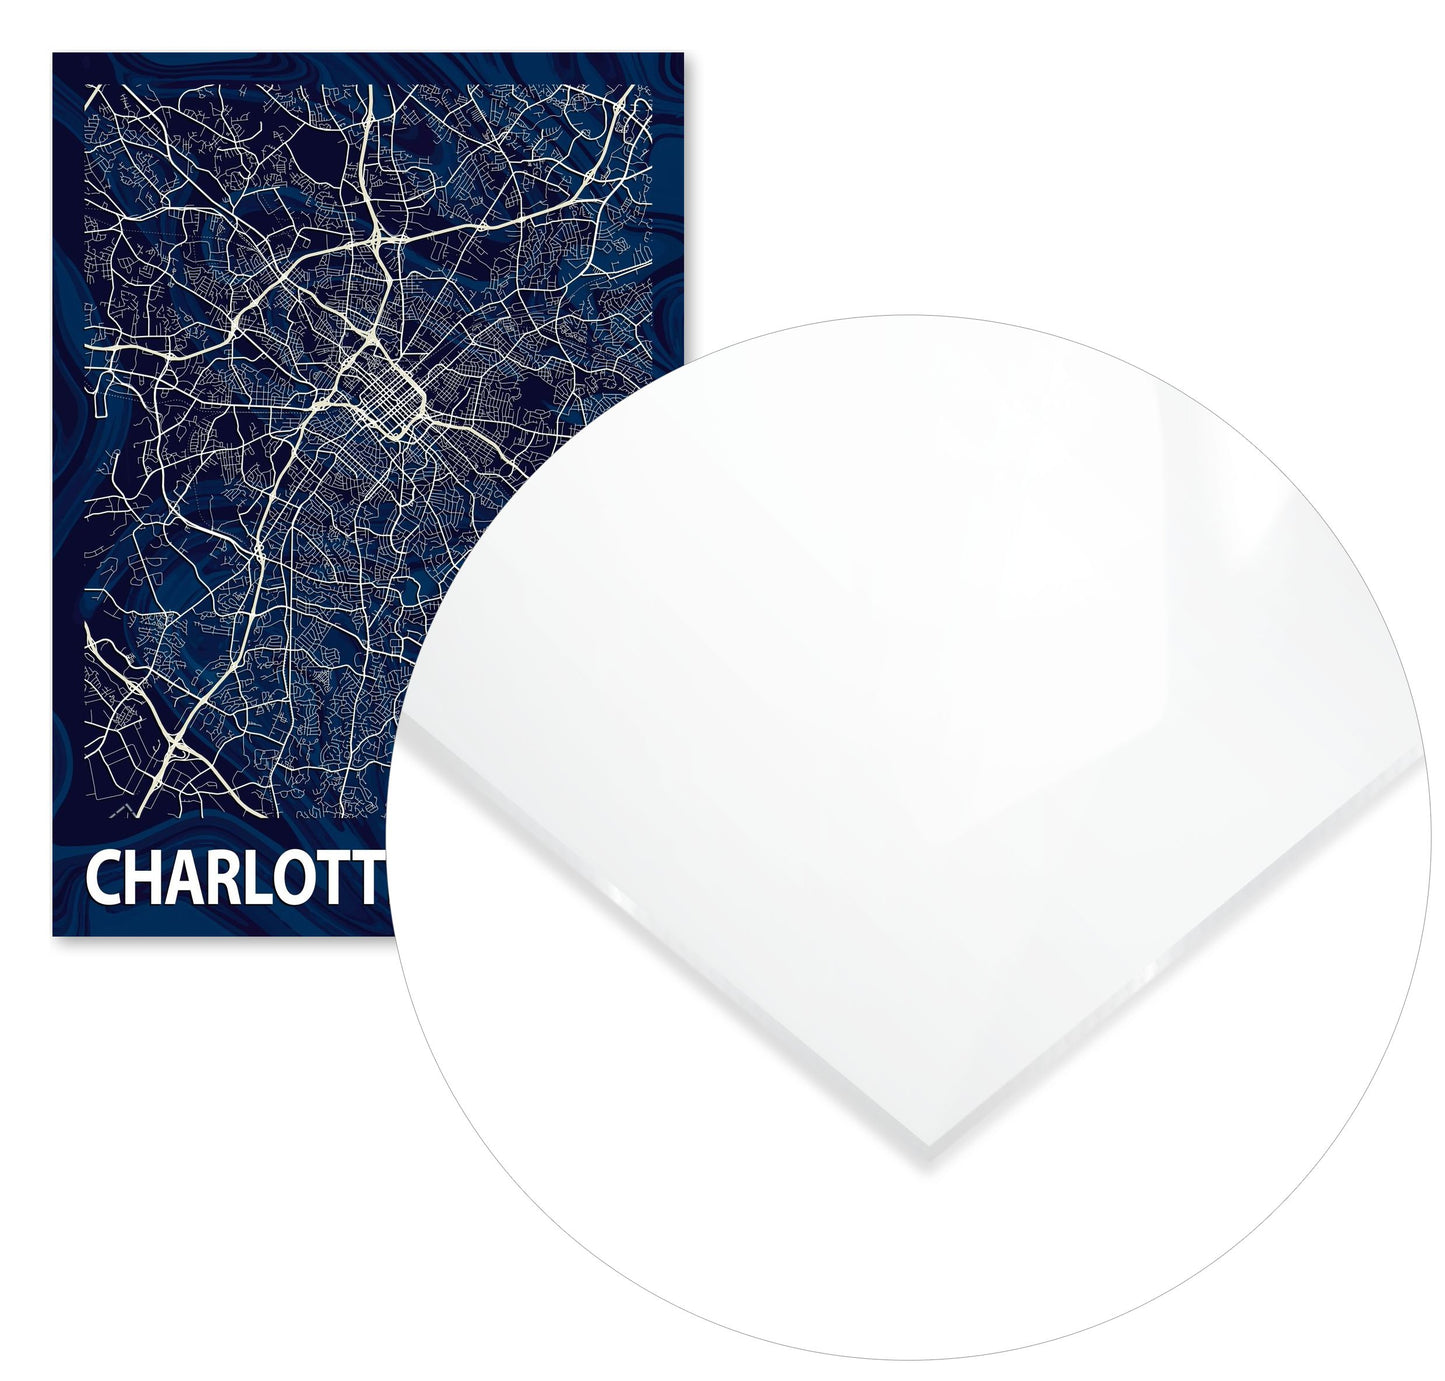 CHARLOTTE CROCUS MARBLE MAP  - @Helios